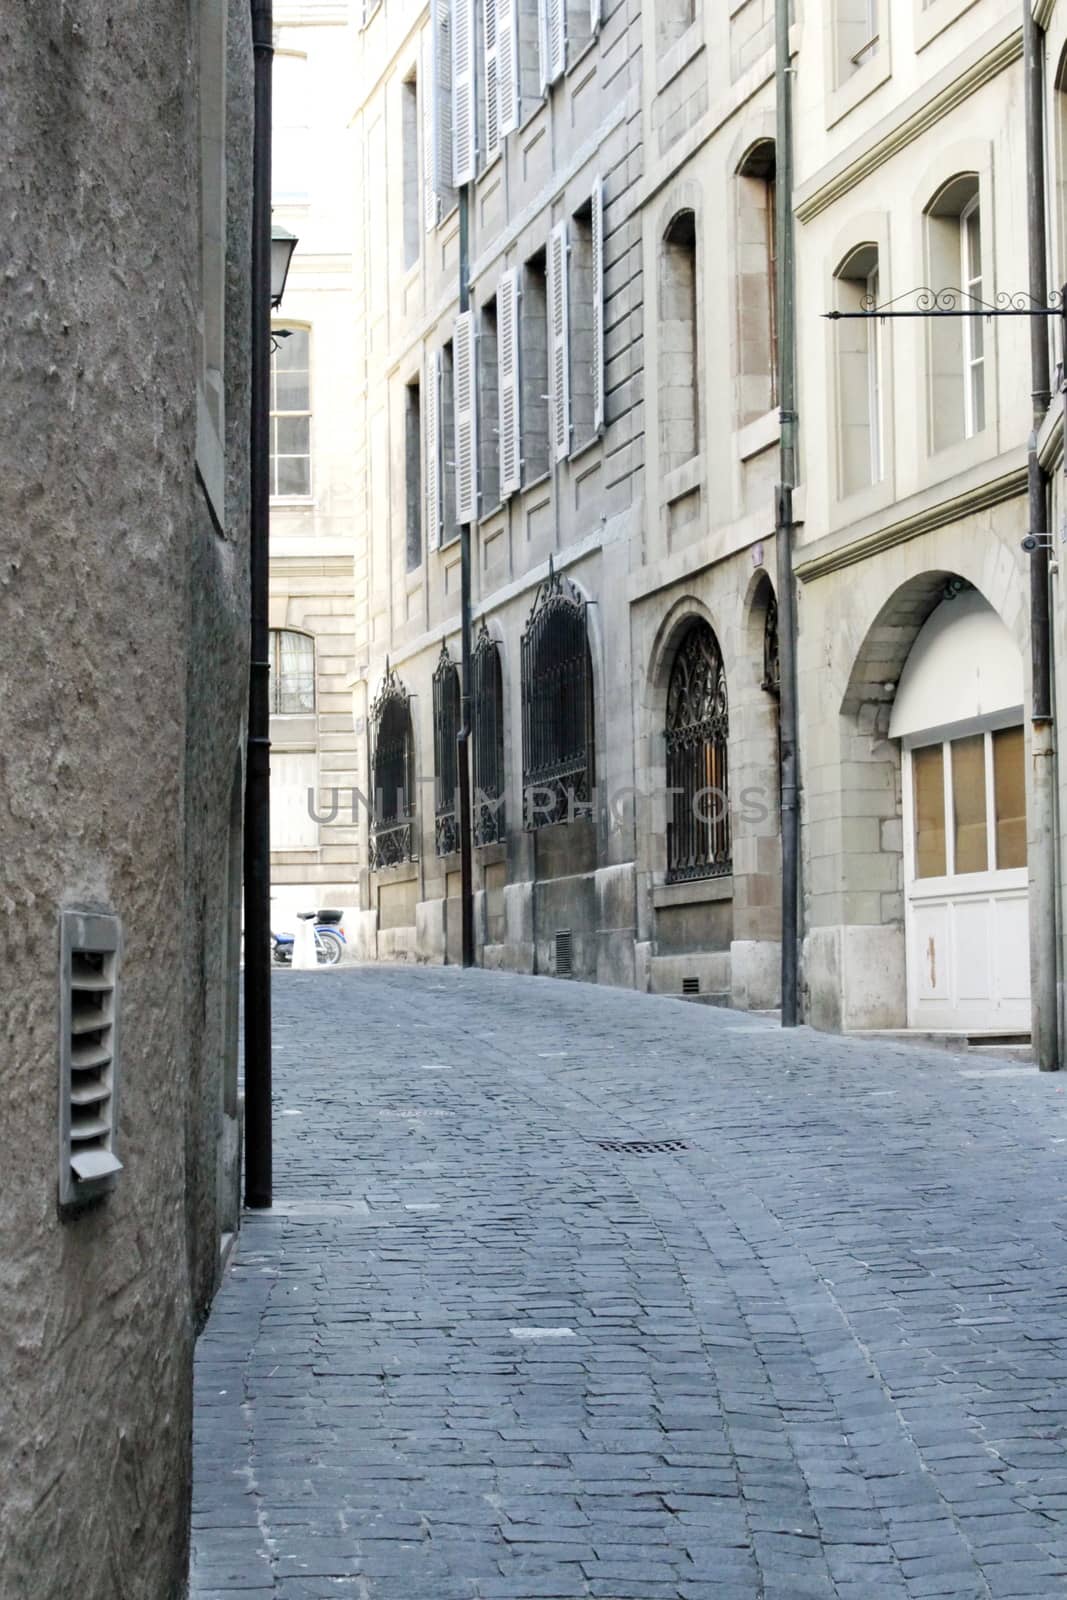 Street in old city, Geneva, Switzerland by Elenaphotos21